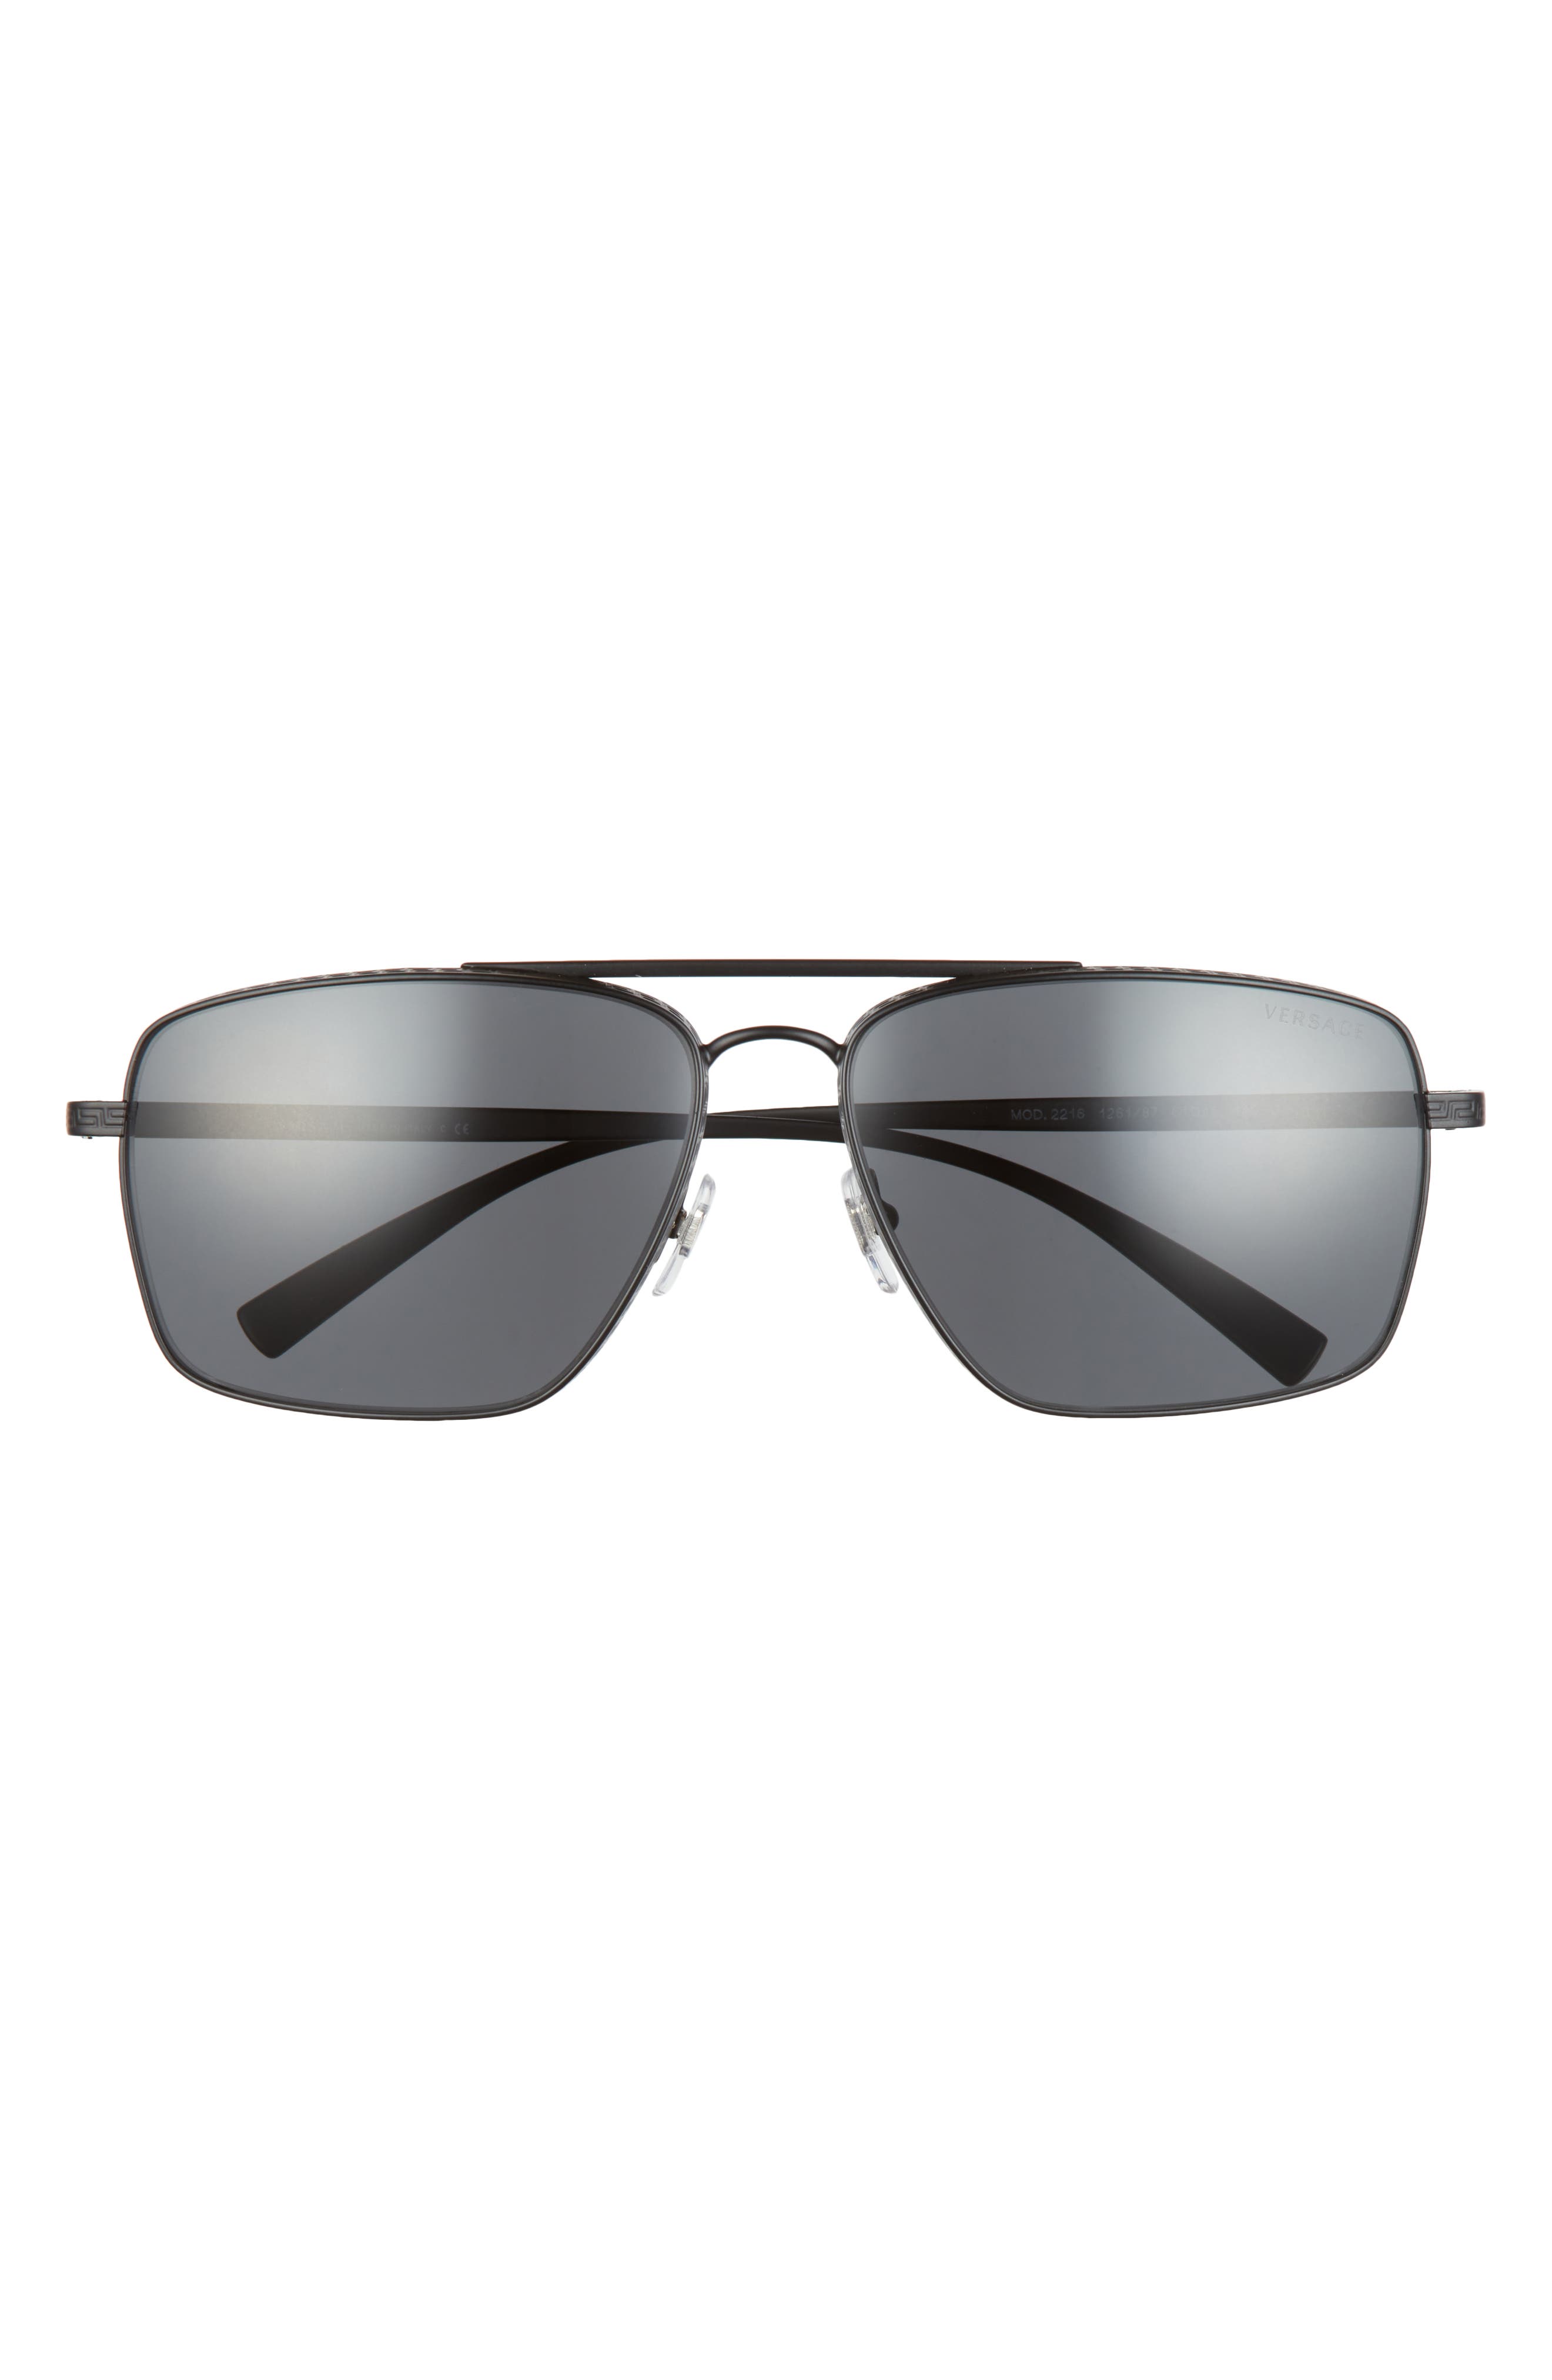 Versace 61mm Aviator Sunglasses in Matte Black/Dark Grey at Nordstrom